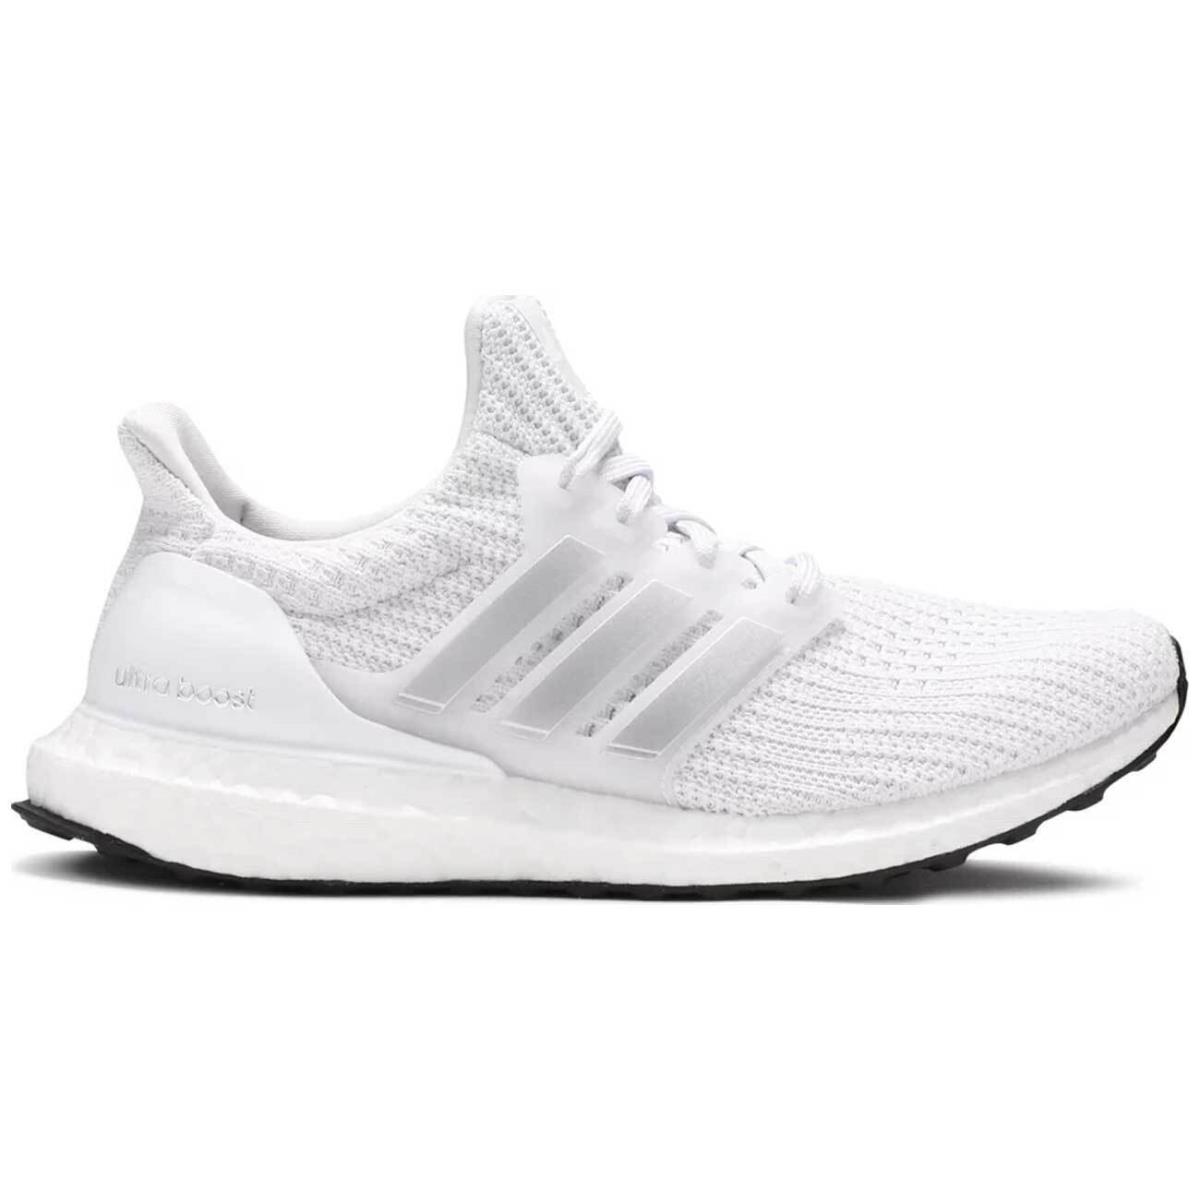 Adidas W Ultraboost Dna FY9333 White Women`s Primeknit Running Shoes - White